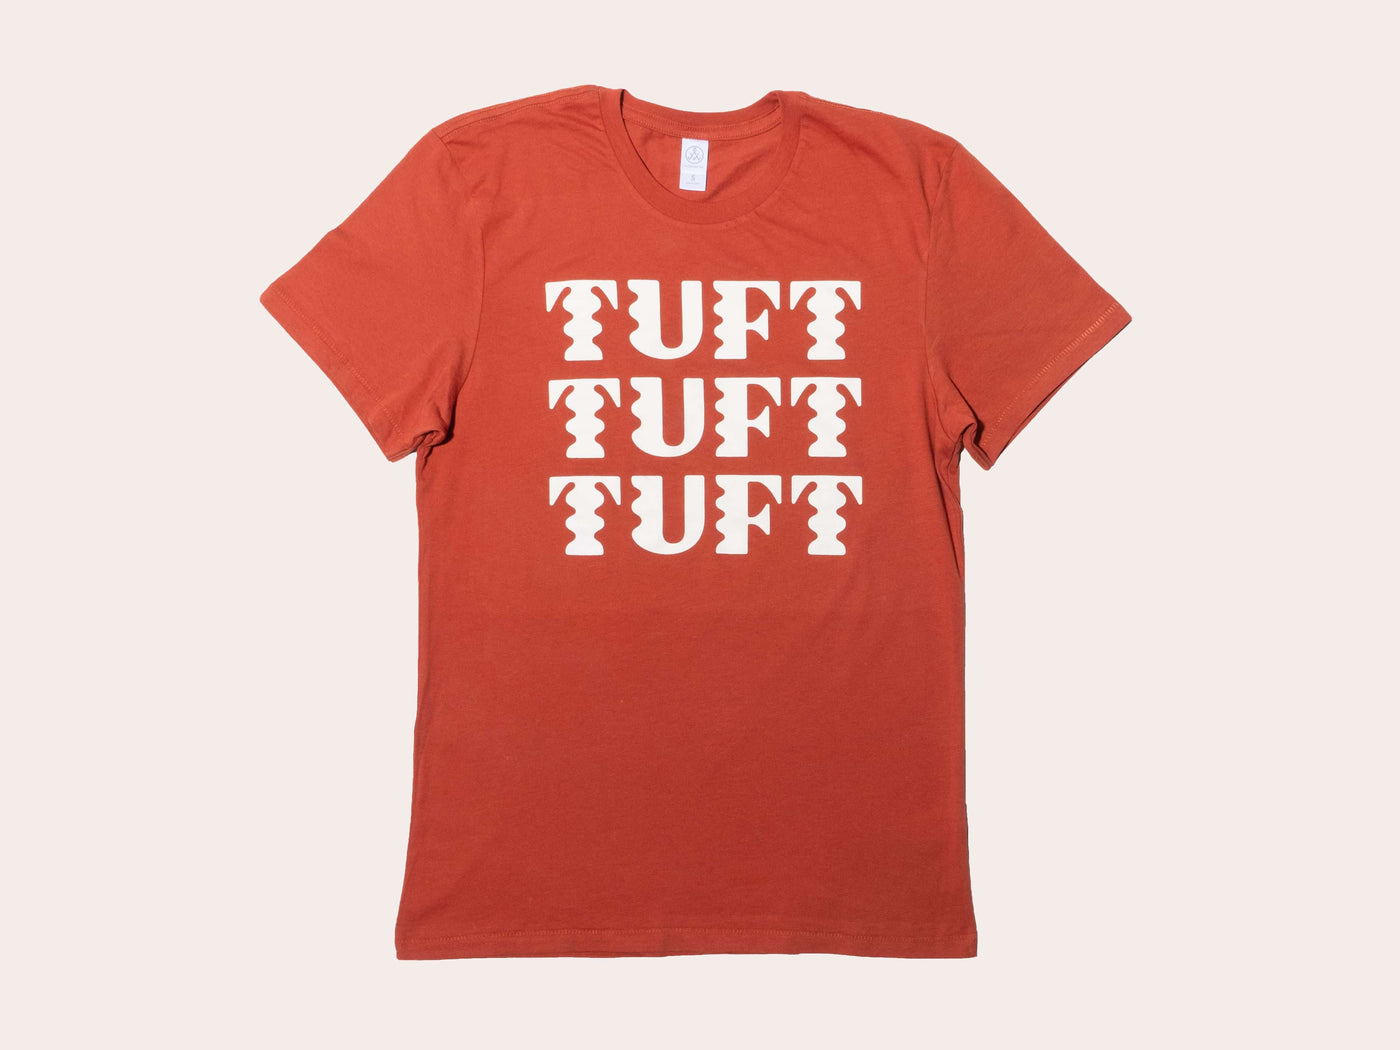 Rust Tuft Tuft Tuft Tee (Classic fit) Merch Tuft the World 